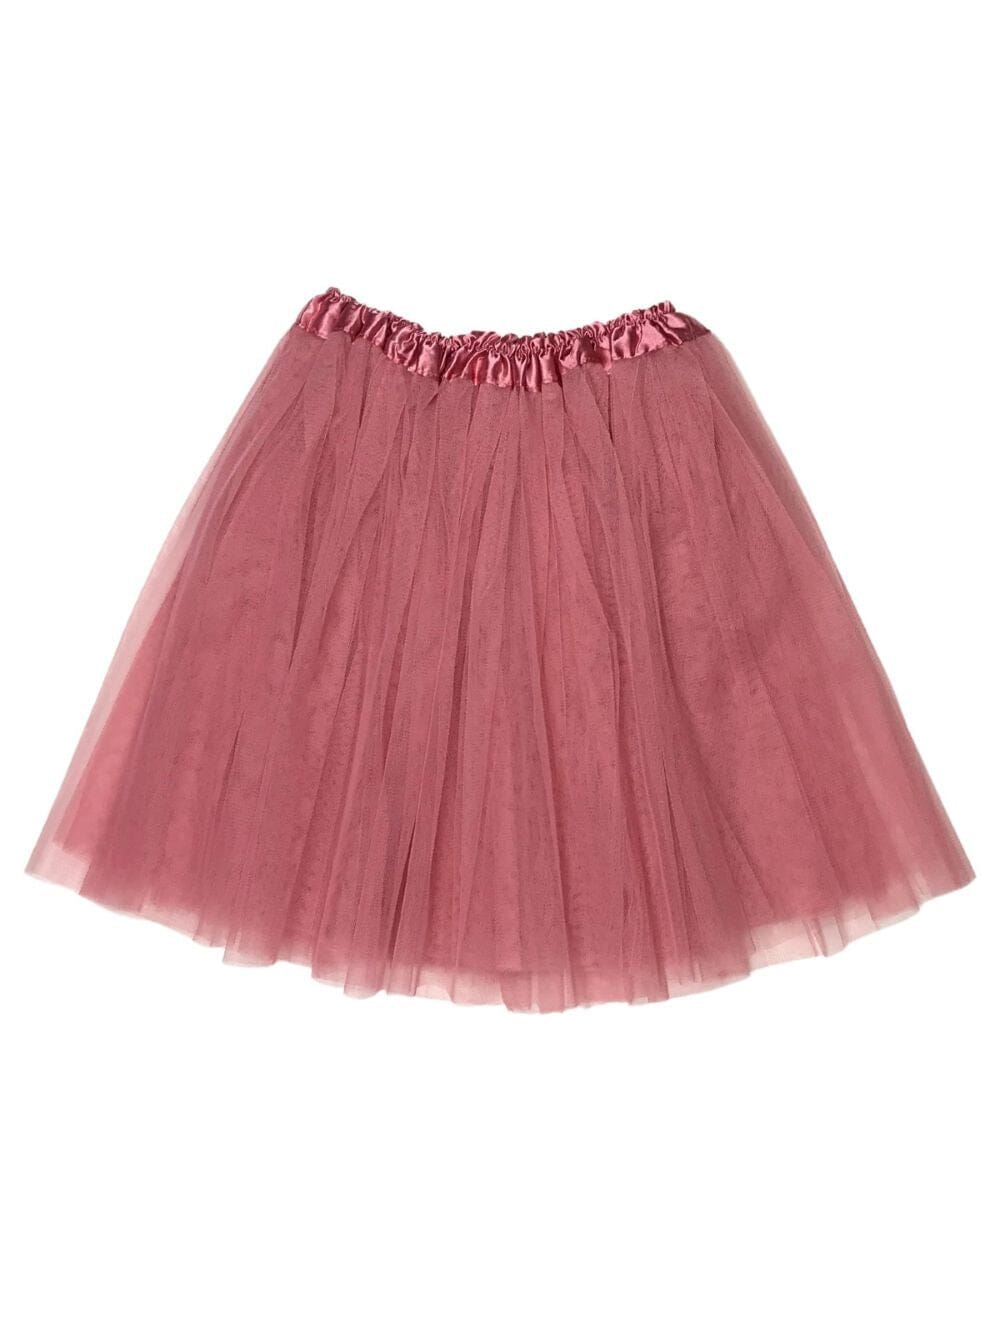 Dusty Rose Plus Size Adult Tutu Skirt - Women's Plus Size 3- Layer Basic Ballet Costume Dance Tutus - Sydney So Sweet